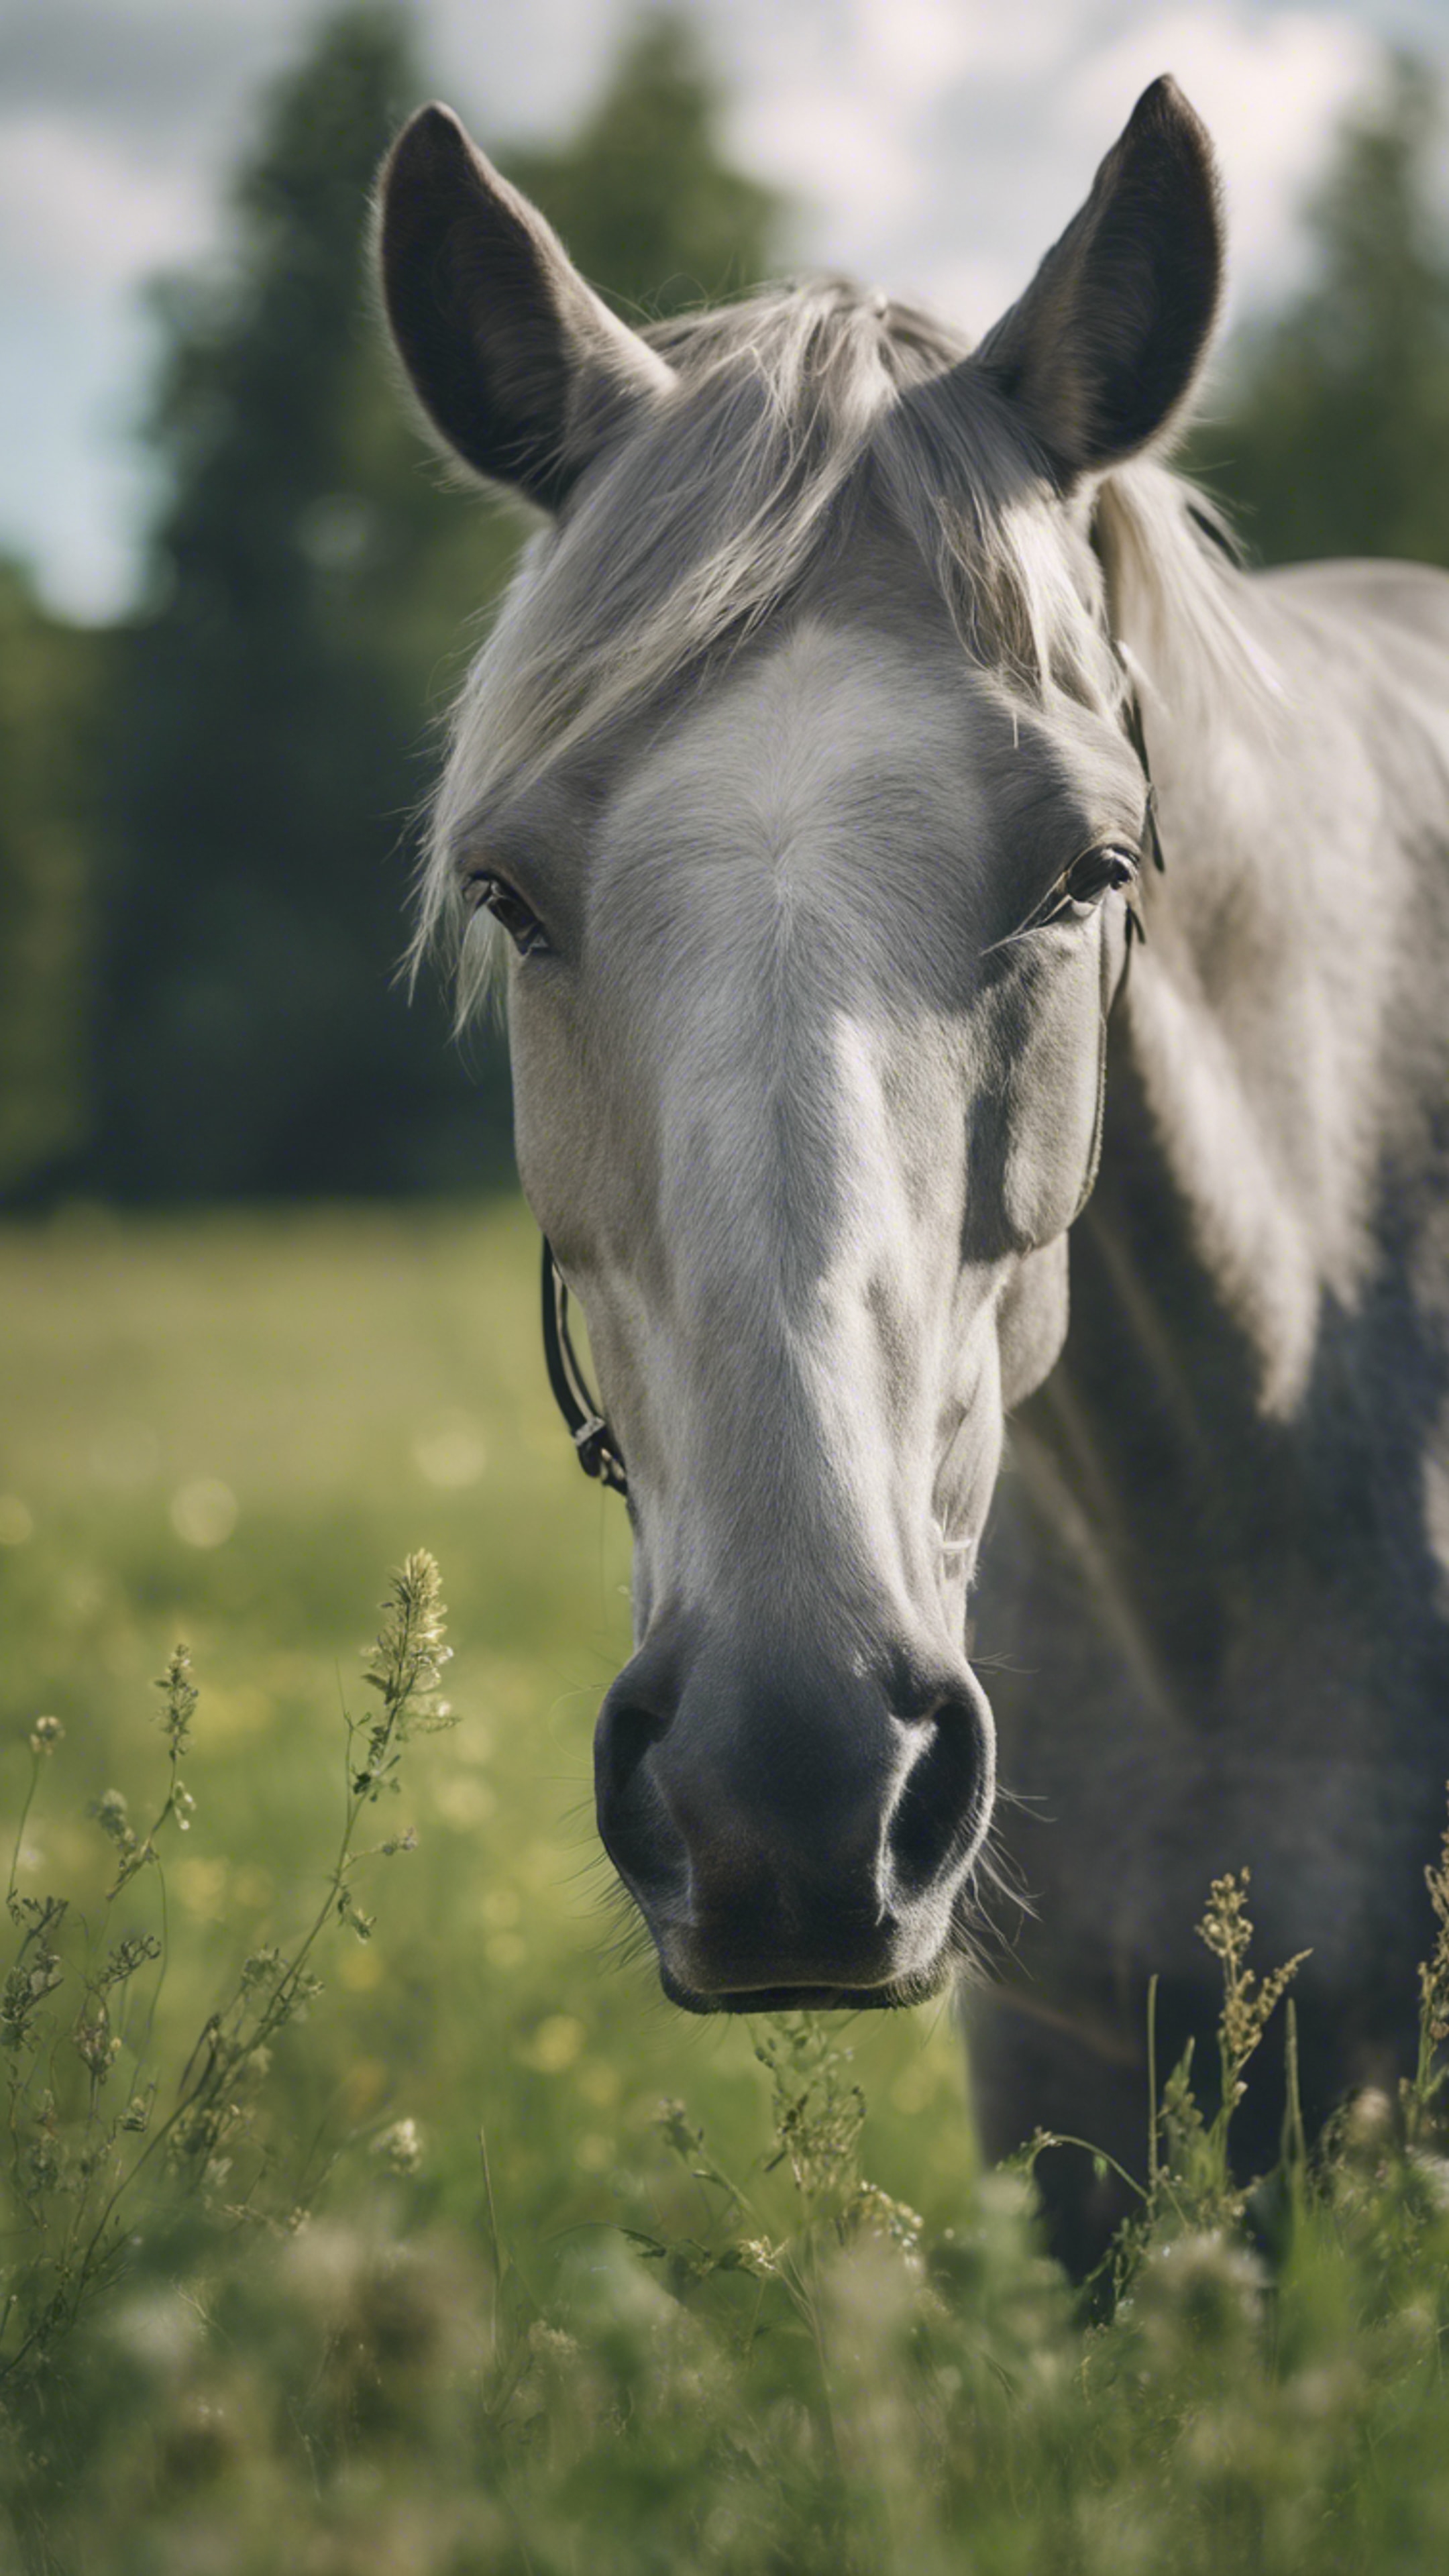 A calm grey quarter horse grazing freely in a green meadow under a cloudy sky. Tapeta[ae89d2cd692c4a6c9aea]